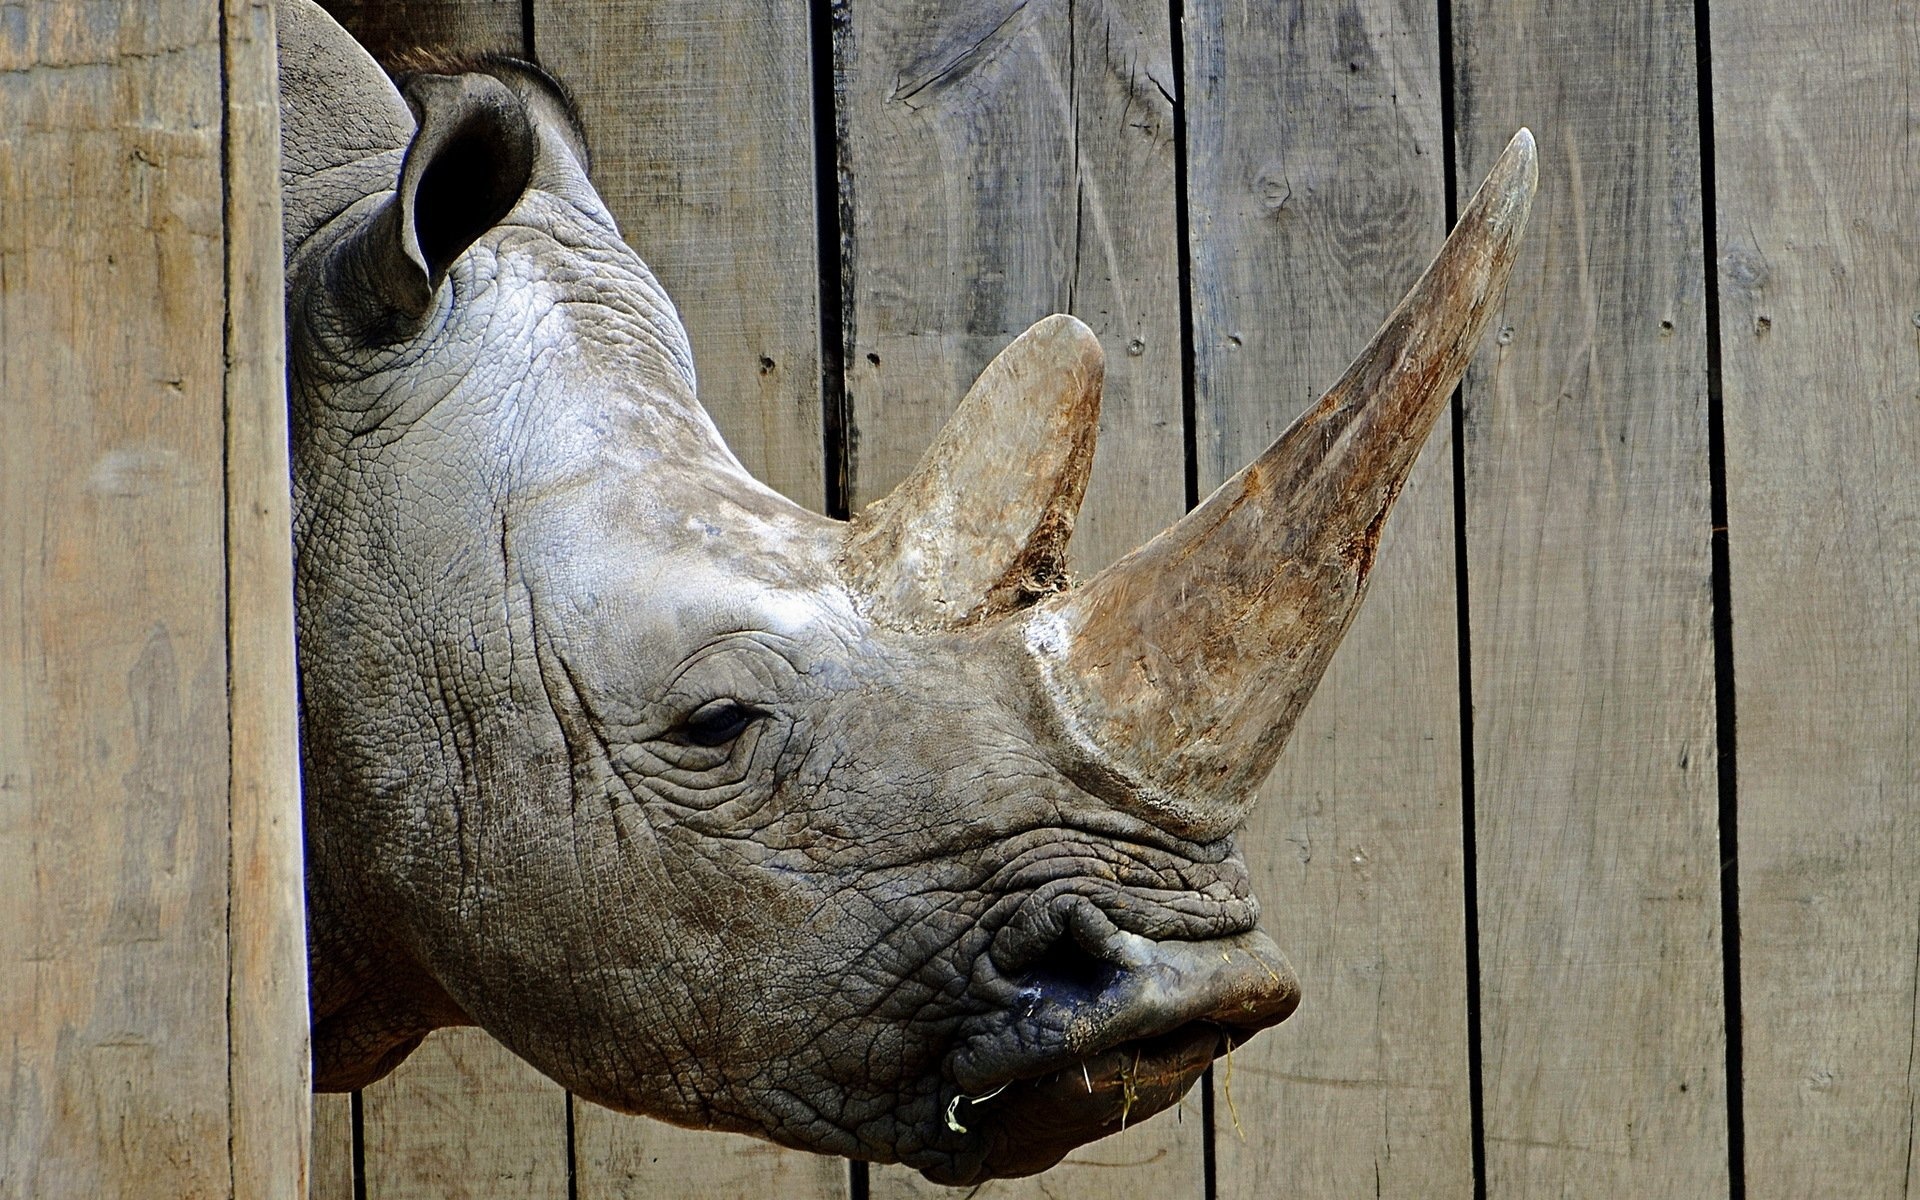 Rhinoceros head image, Rhino wallpaper in high definition, Rhino picture for desktop and mobile, Detailed animal portrait, 1920x1200 HD Desktop